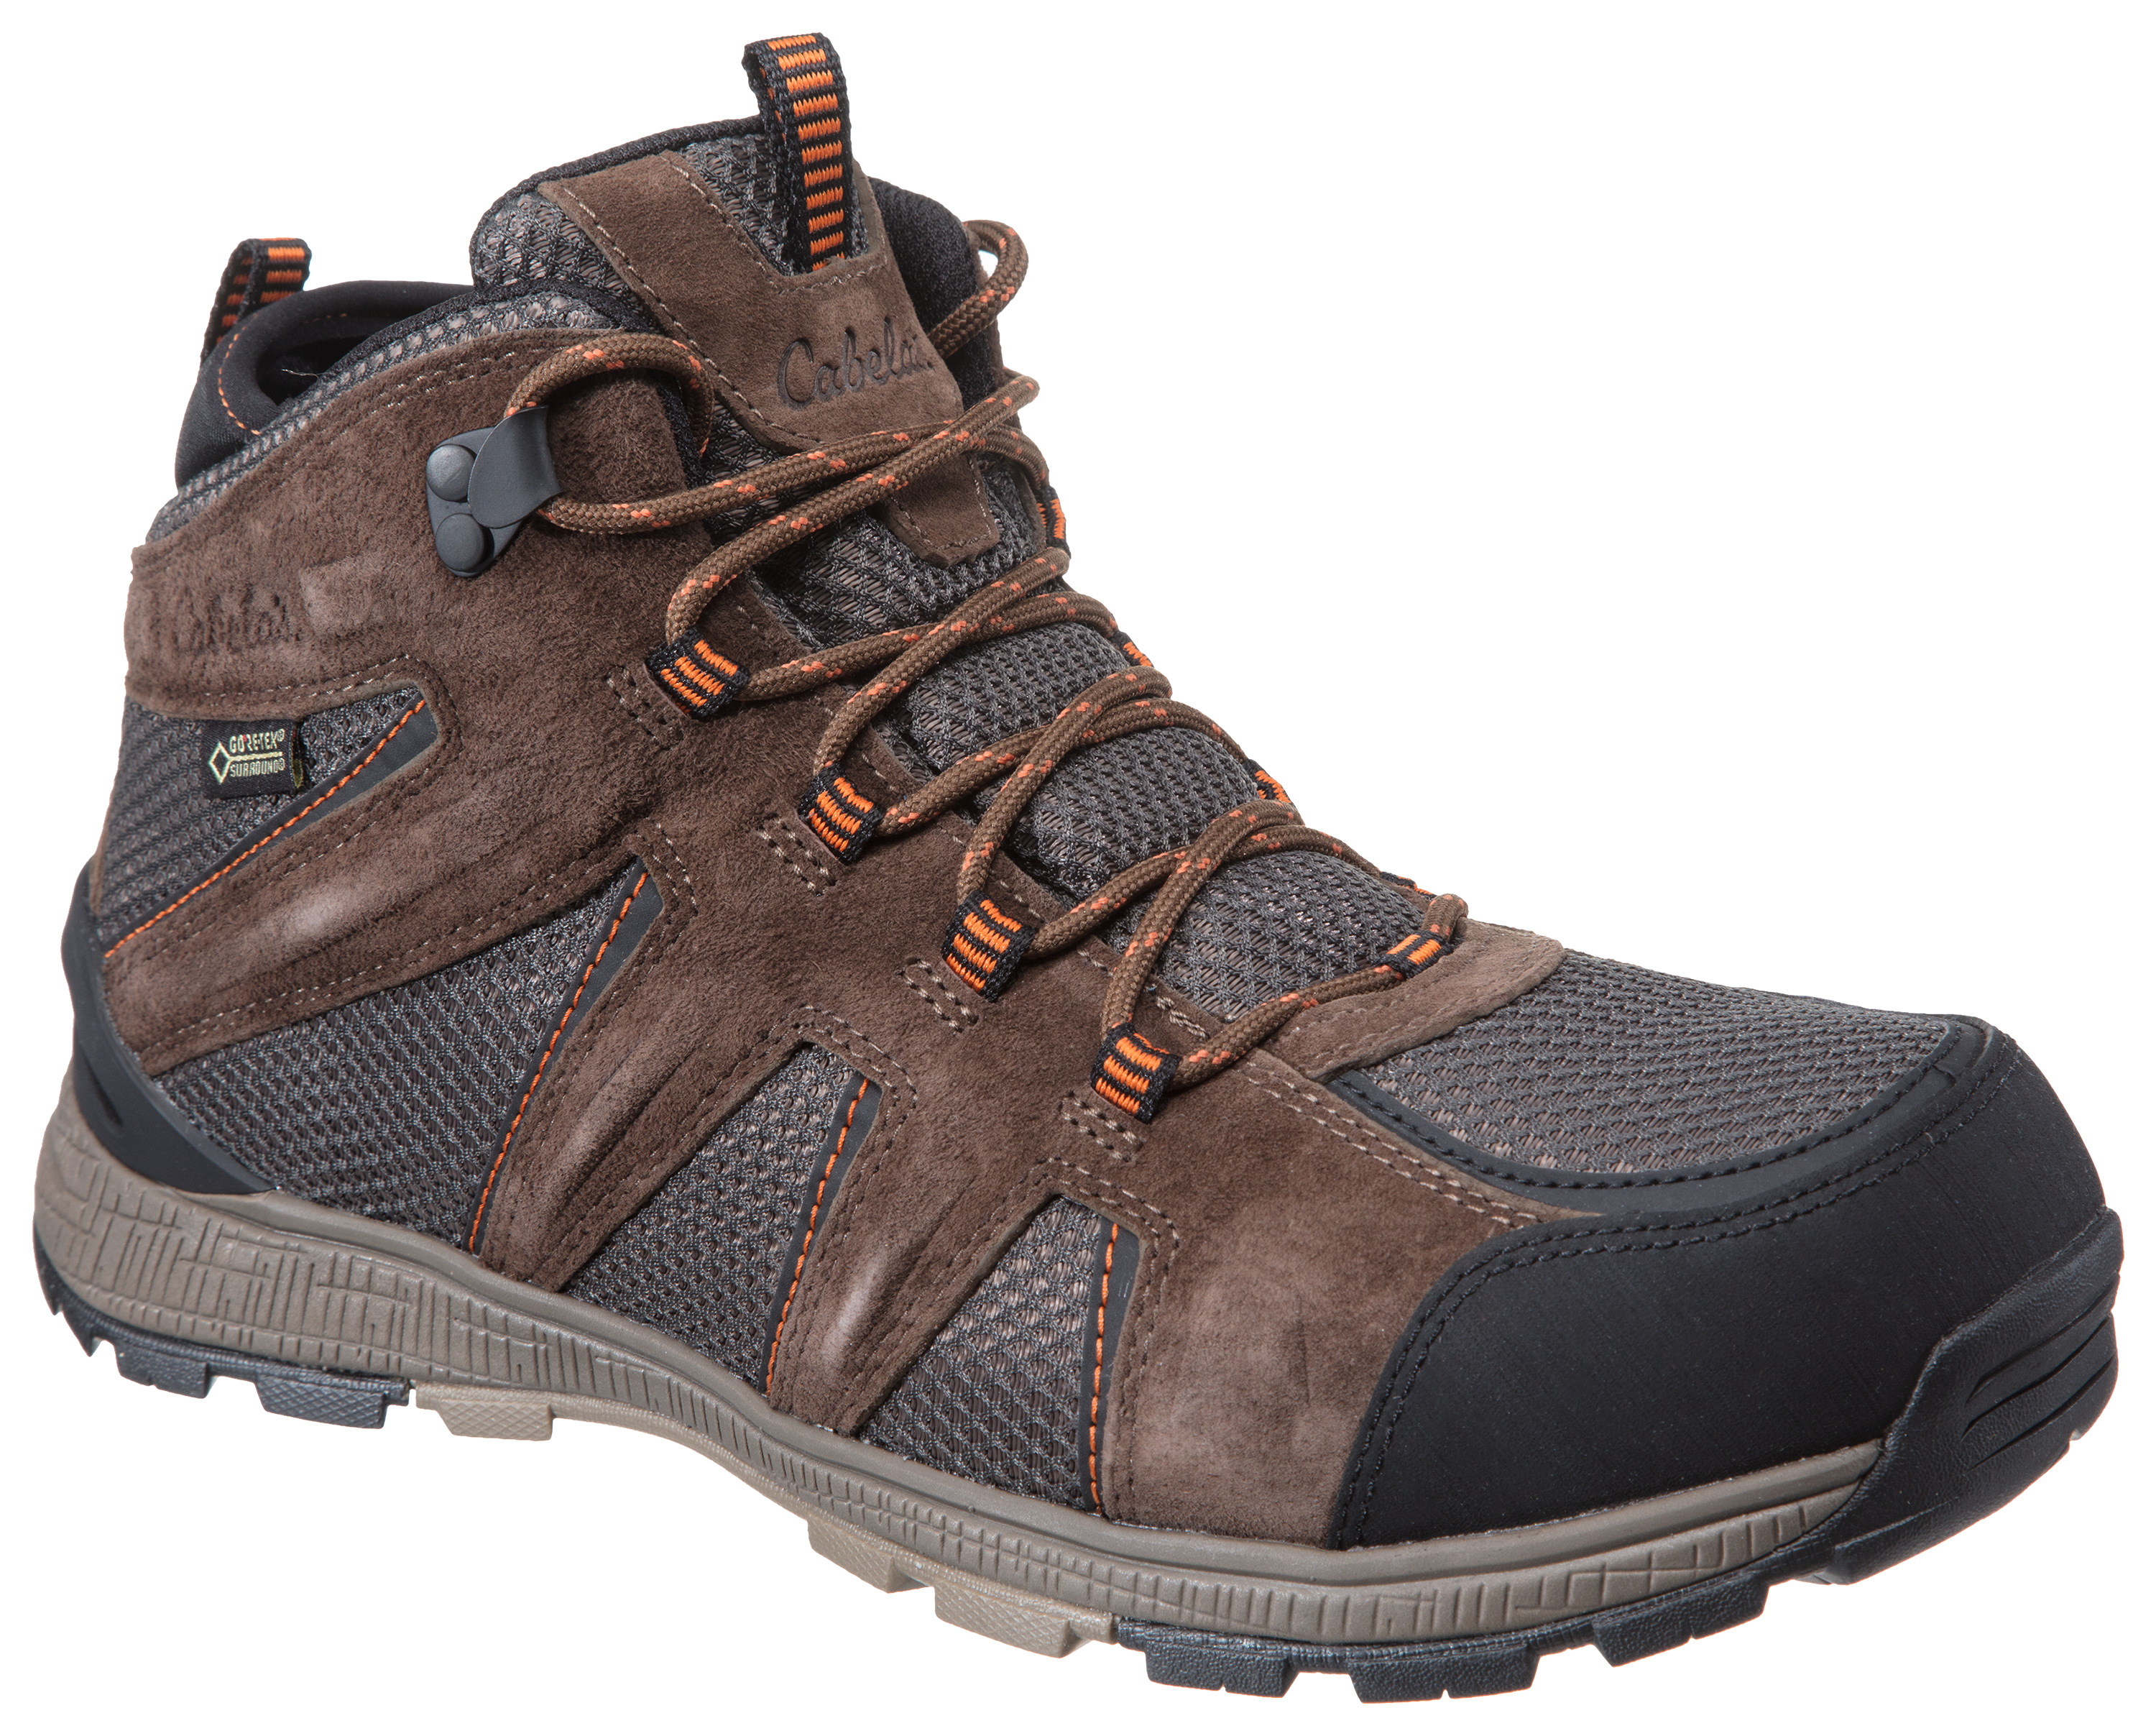 Cabela's 360 Mid GORE-TEX Hiking Boots for Men - Teak - 8.5M